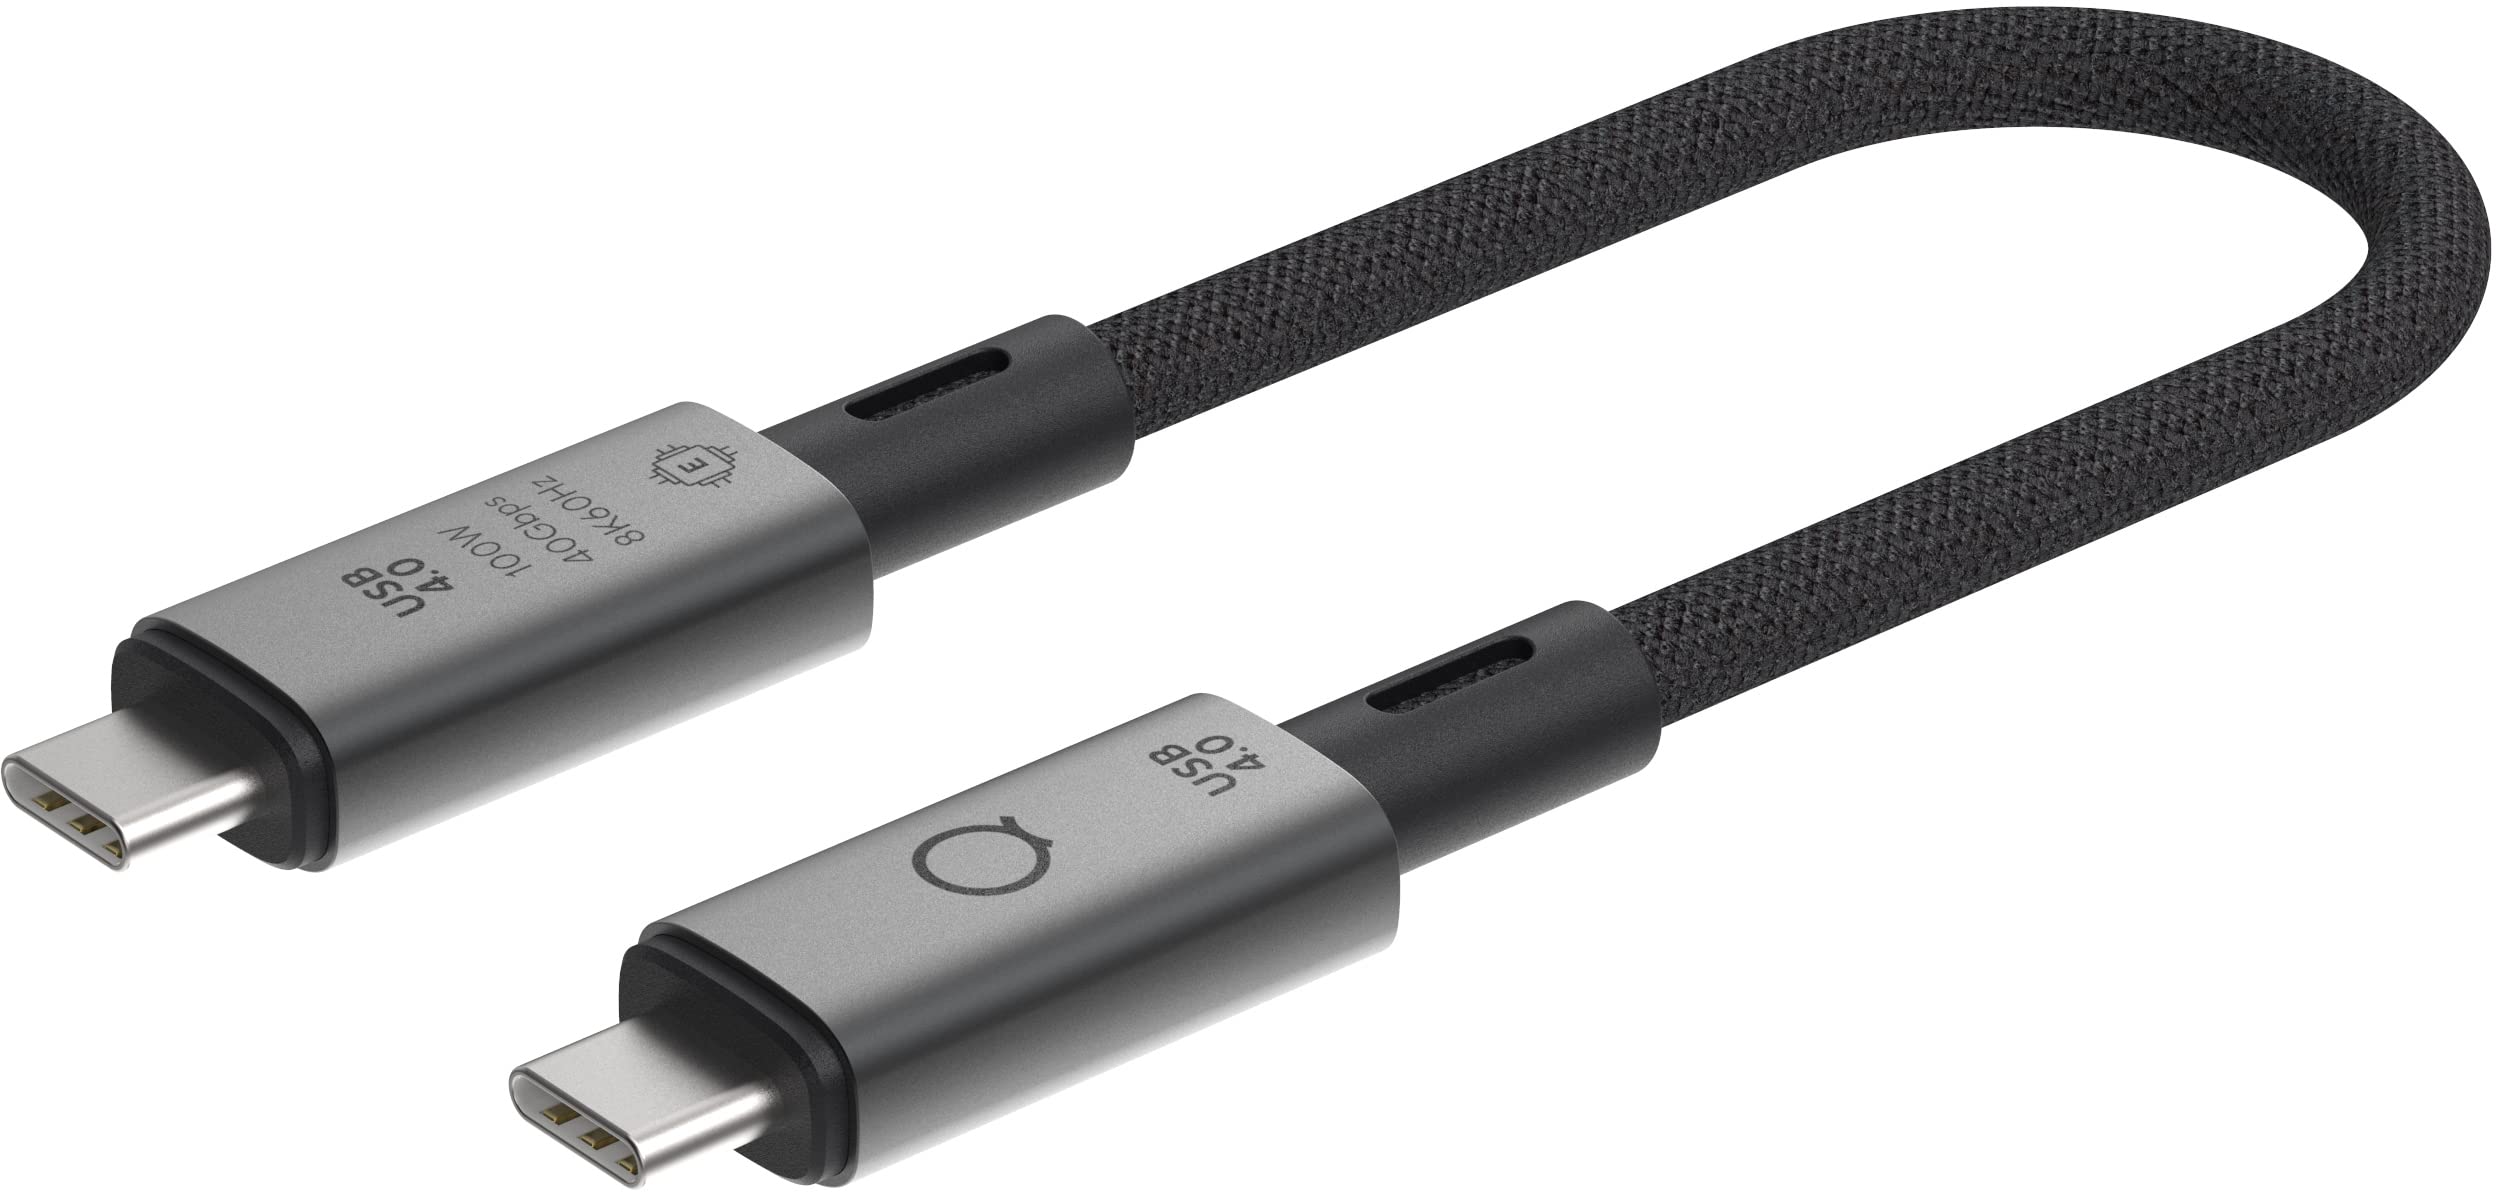 LINQ USB4 PRO CABLE -0.3M